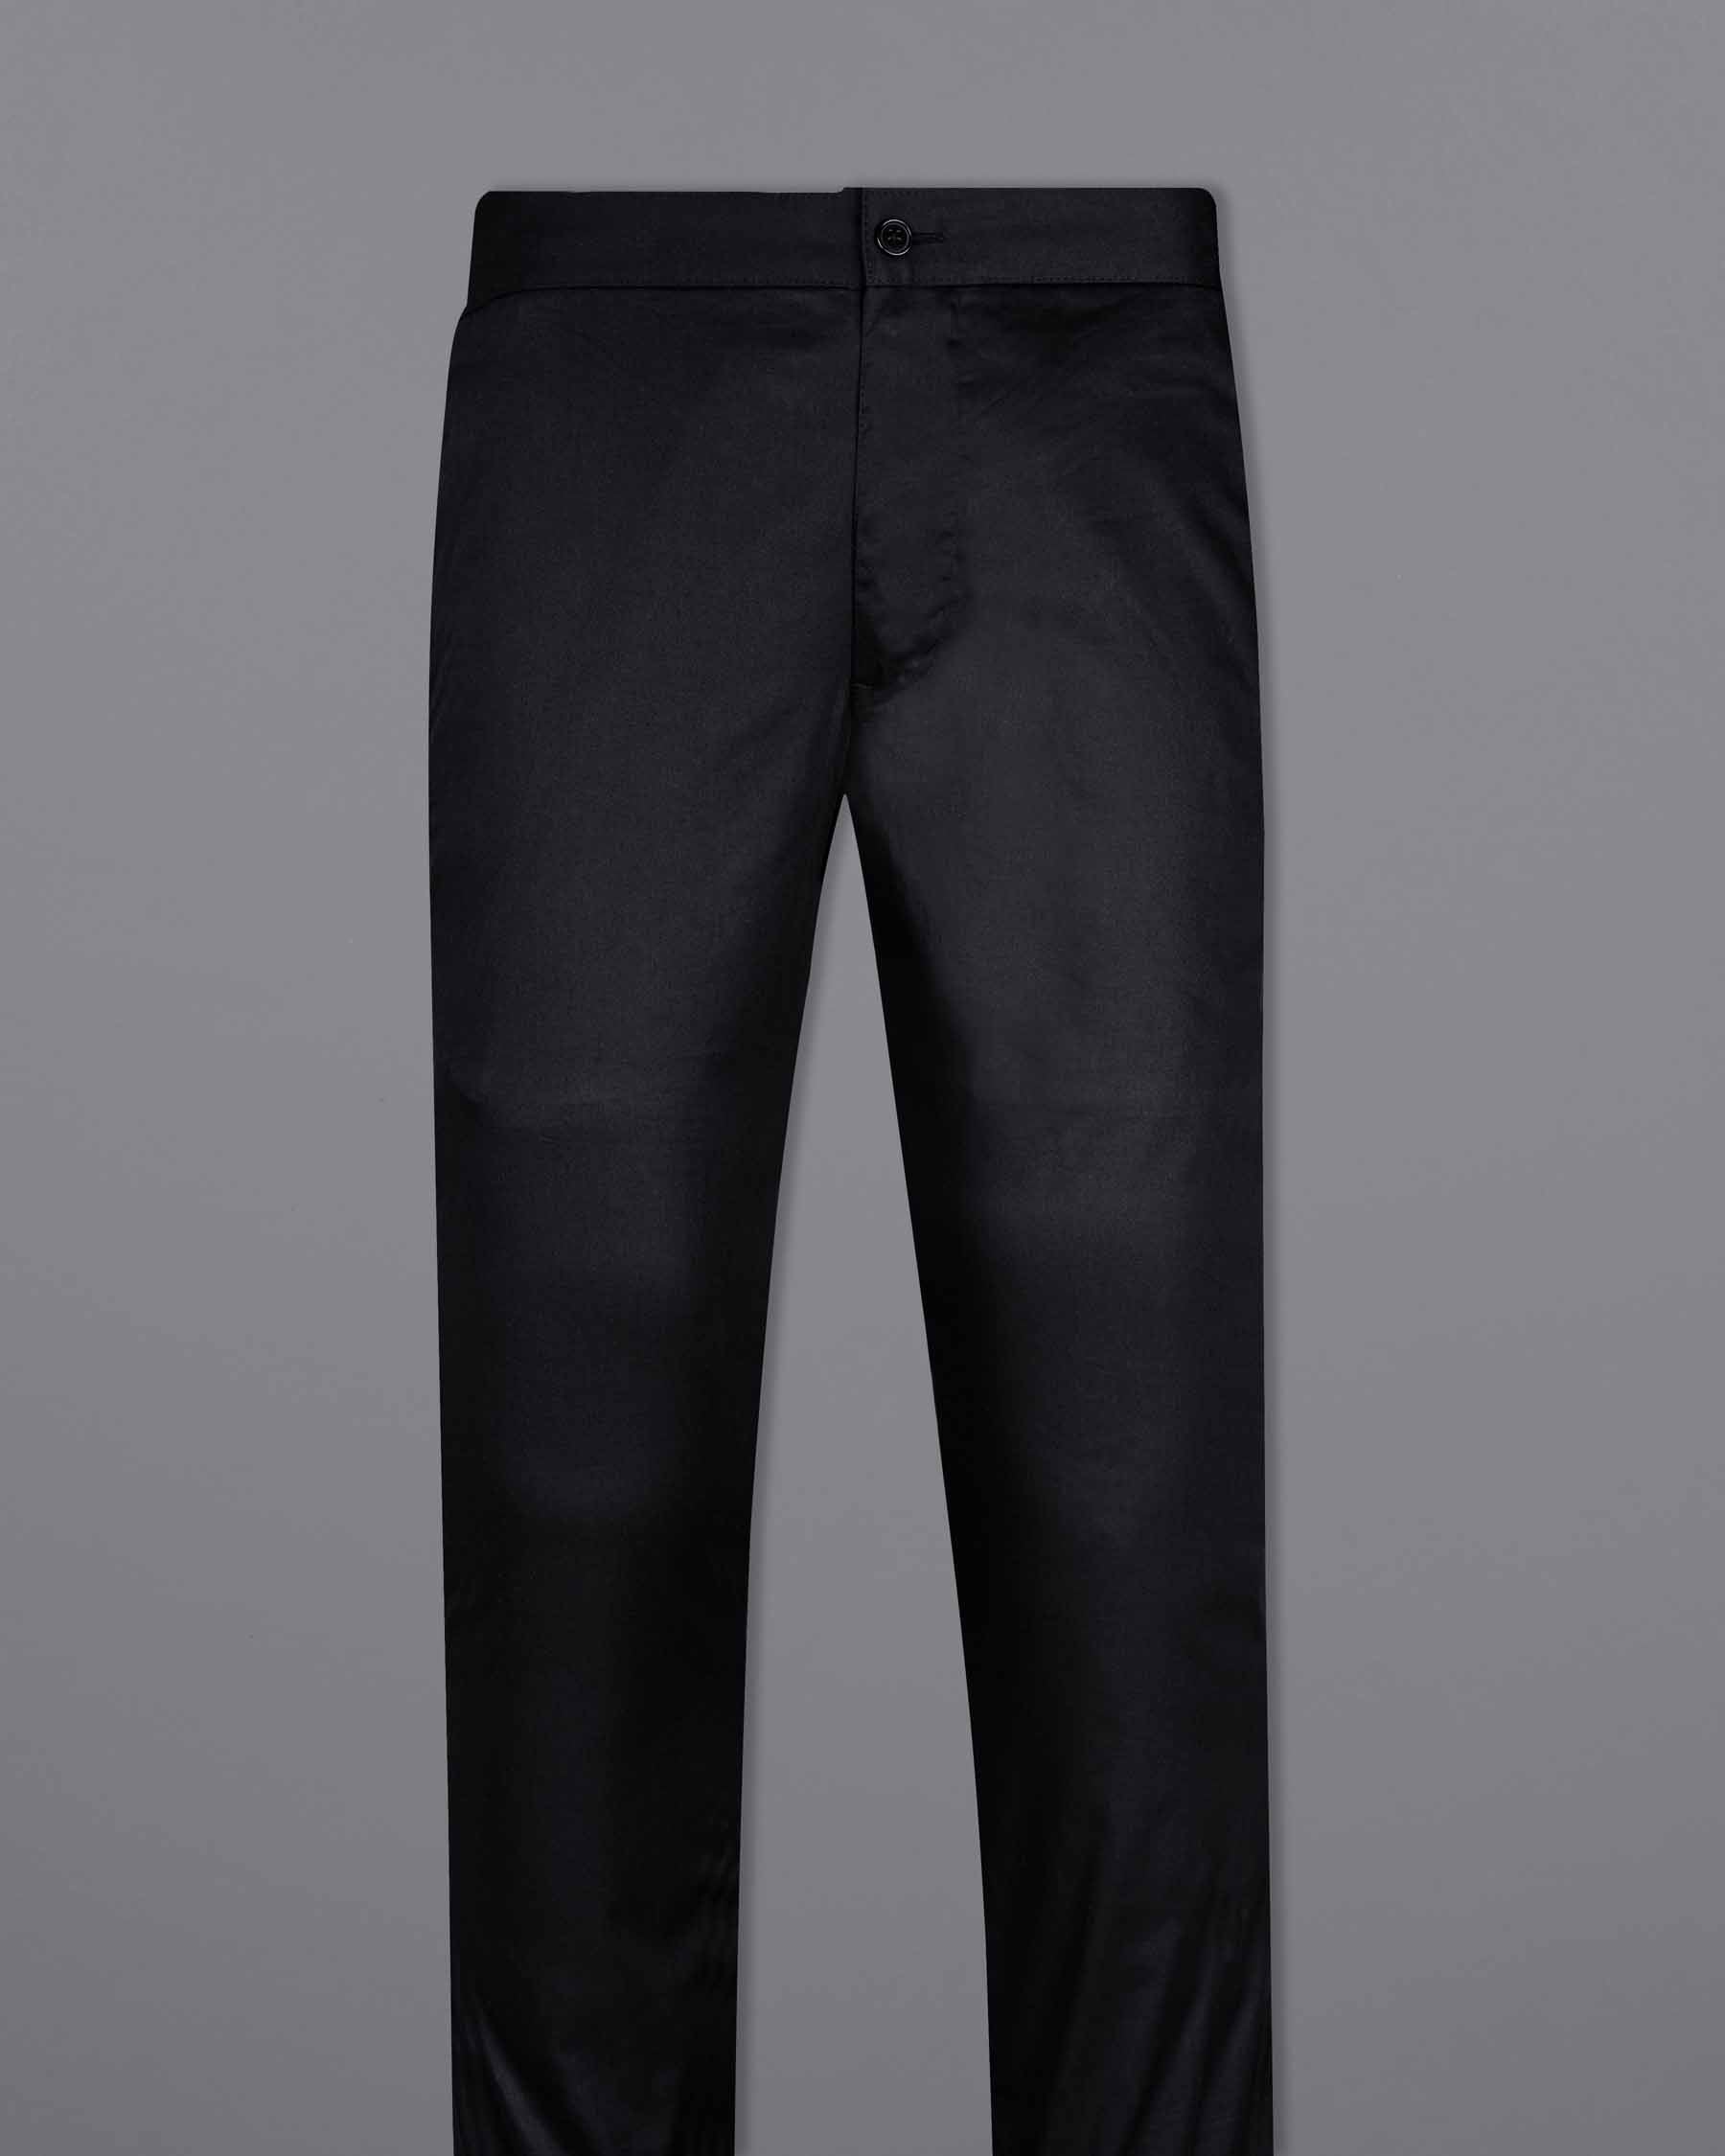 Buy Charcoal Grey Trousers & Pants for Men by NTWK Online | Ajio.com